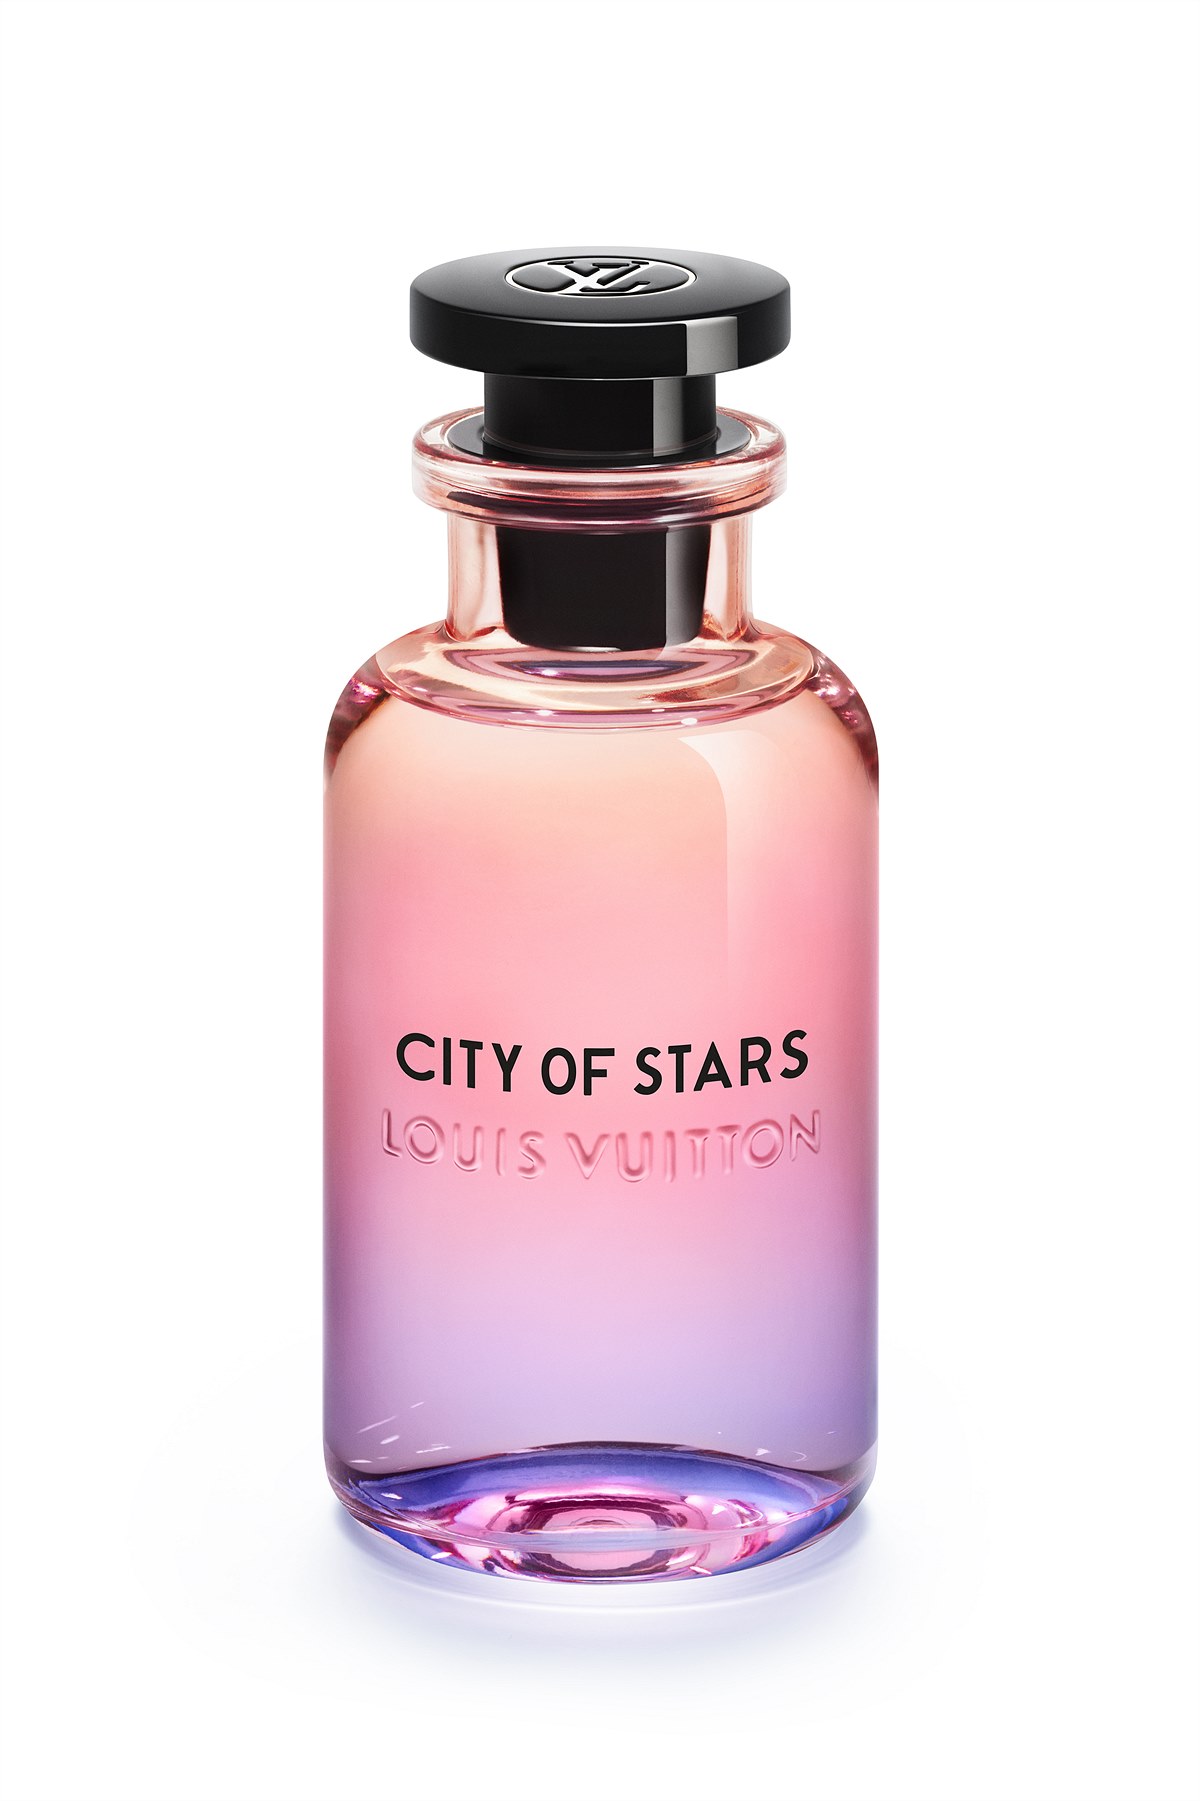 CITY OF STARS